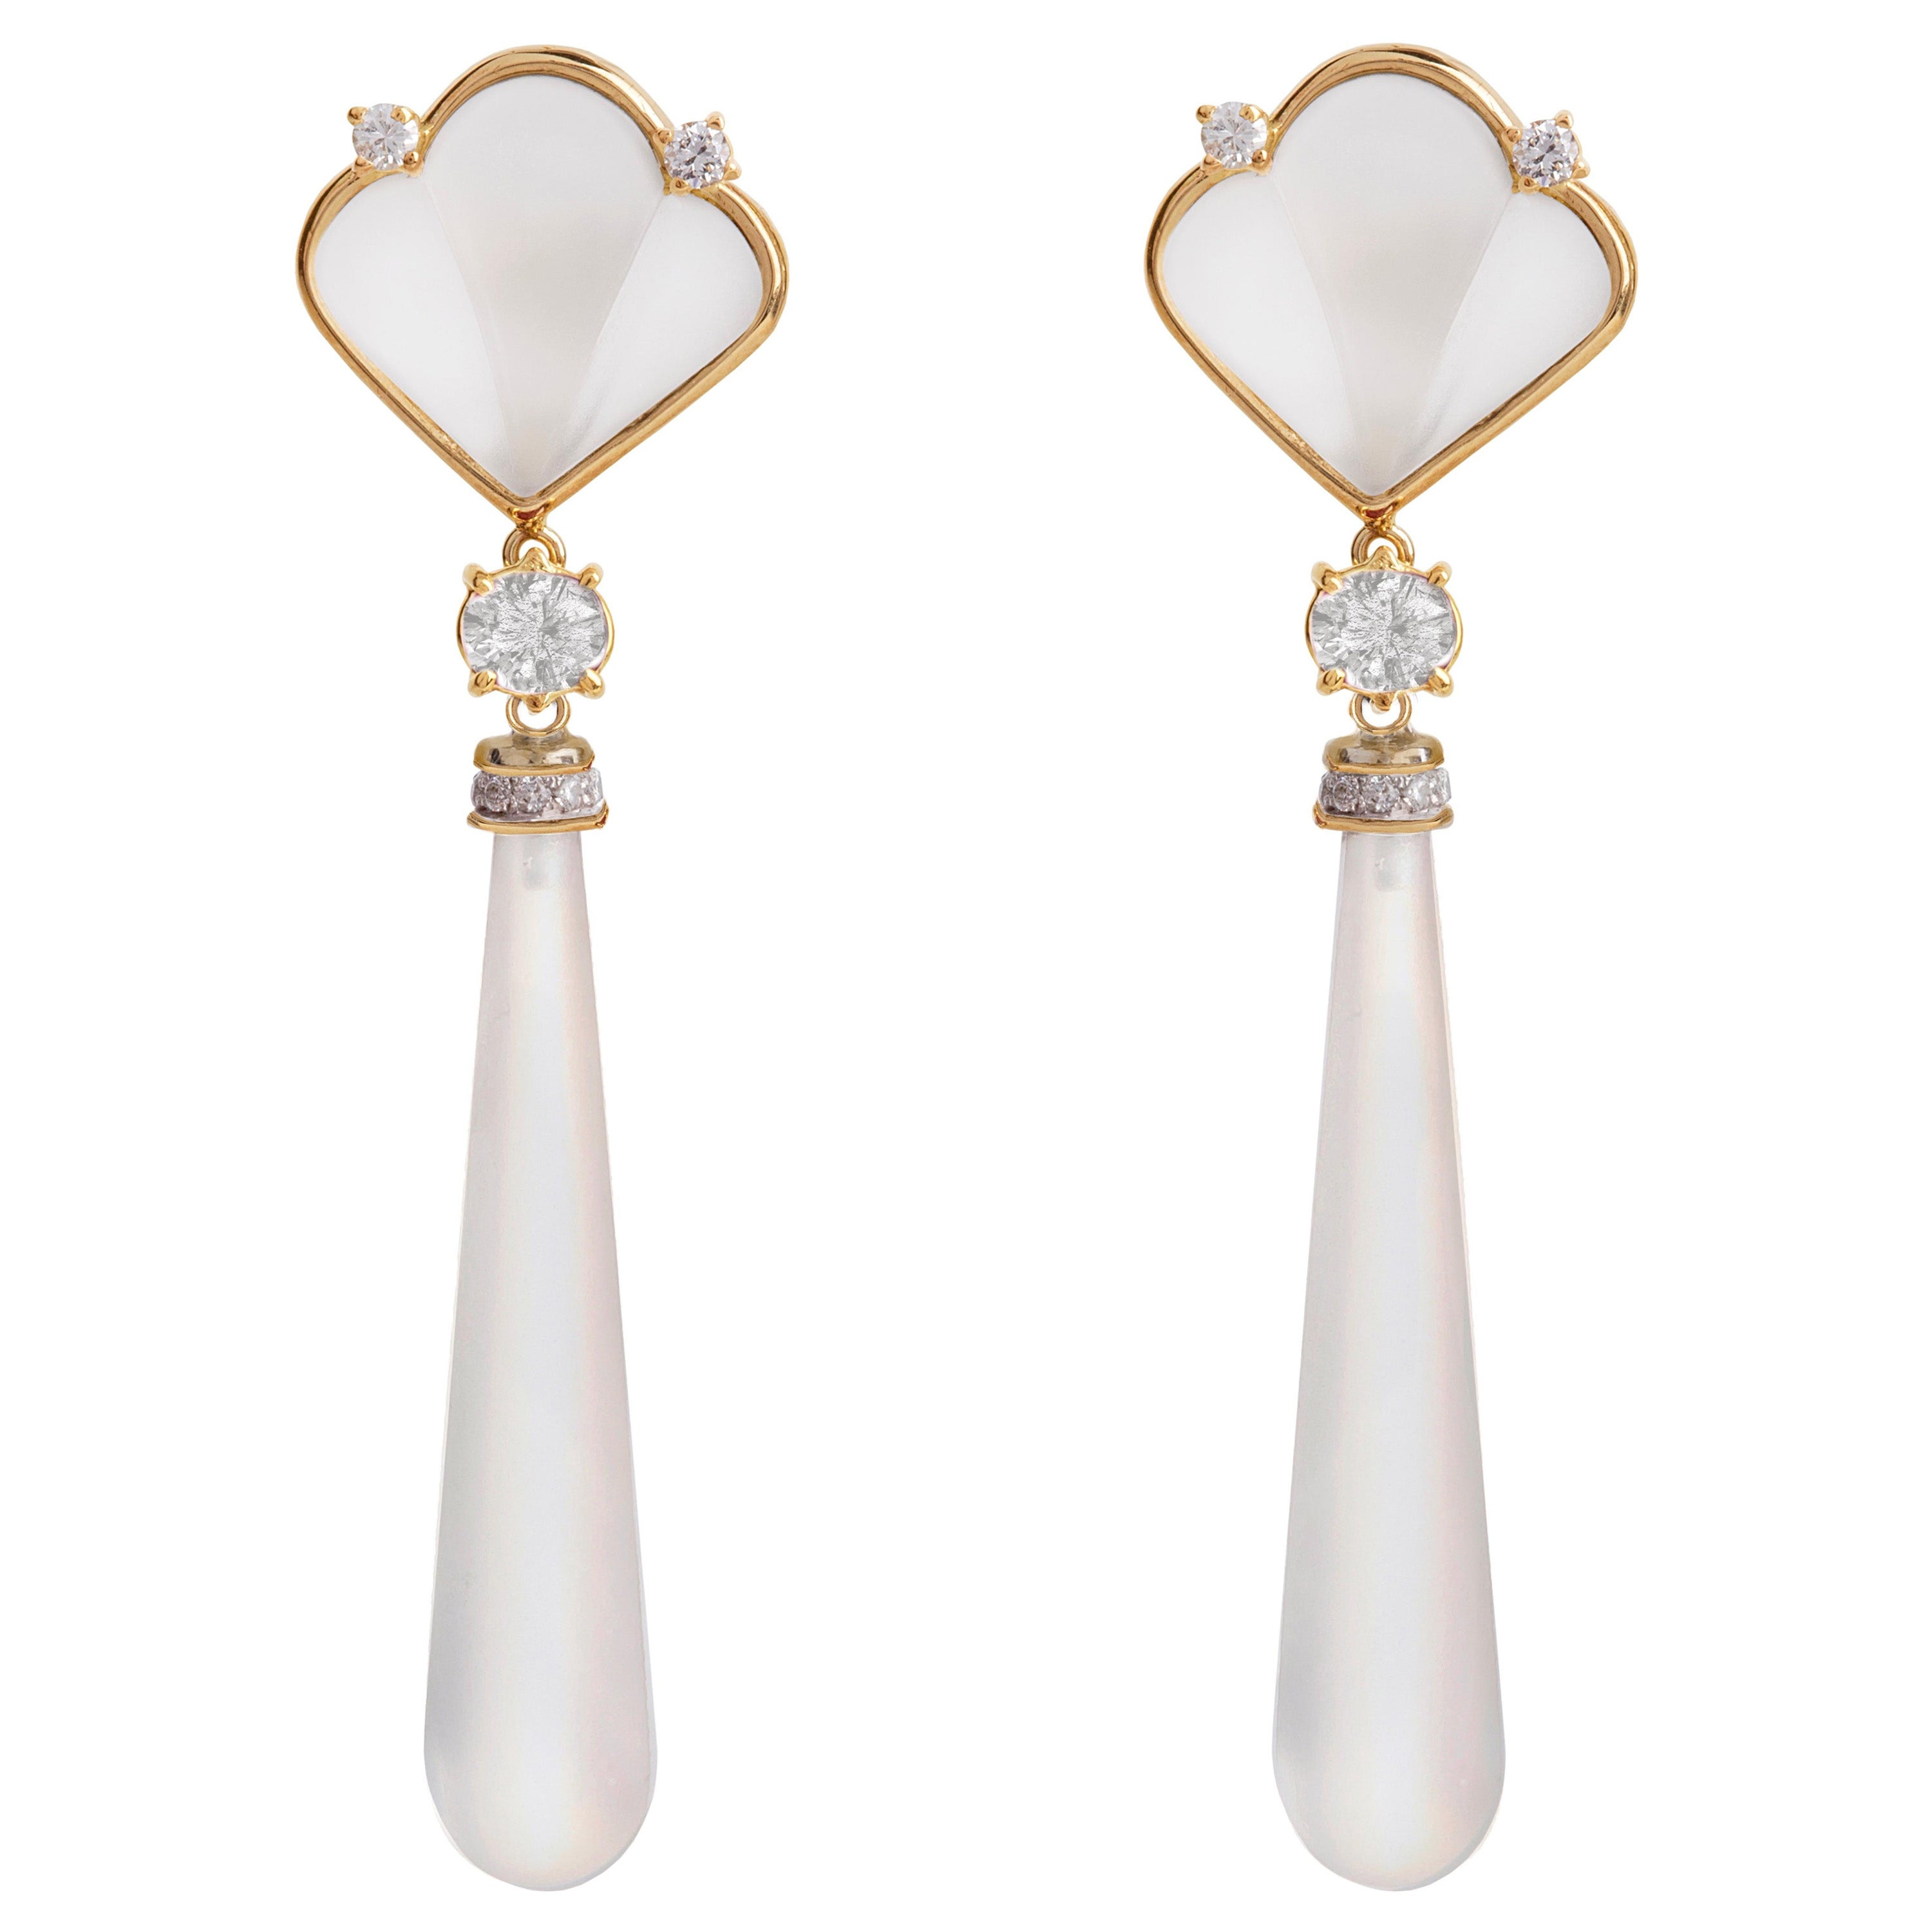 Rossella Ugolini Deco Style White Diamonds 18K Yellow Gold Rock Crystal Earrings